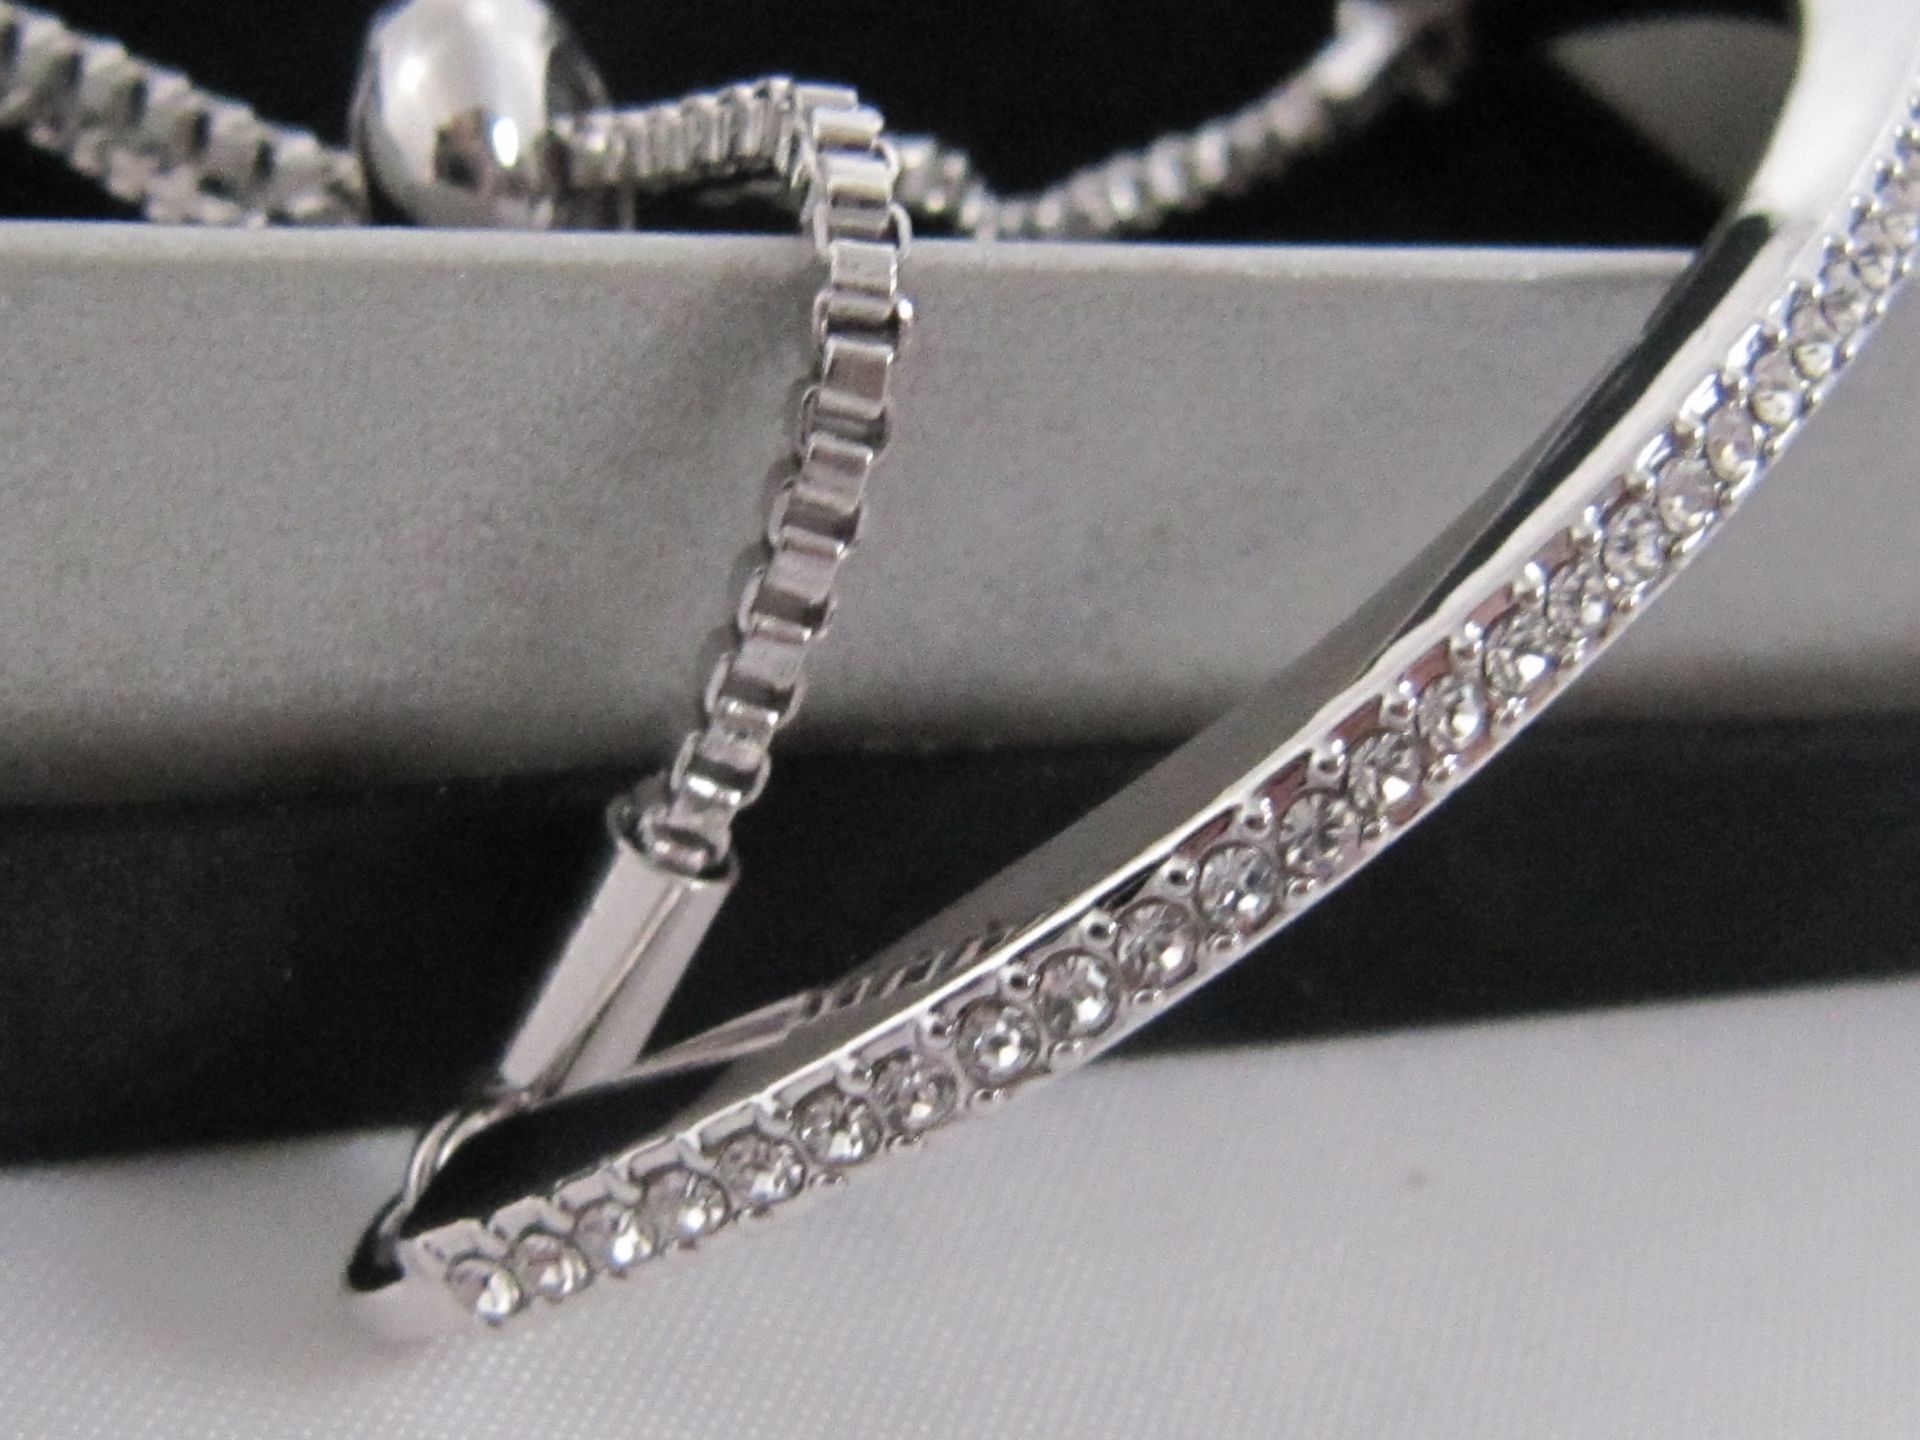 Philip Jones Silver Bracelet with Swarovski Elements. - Image 2 of 3